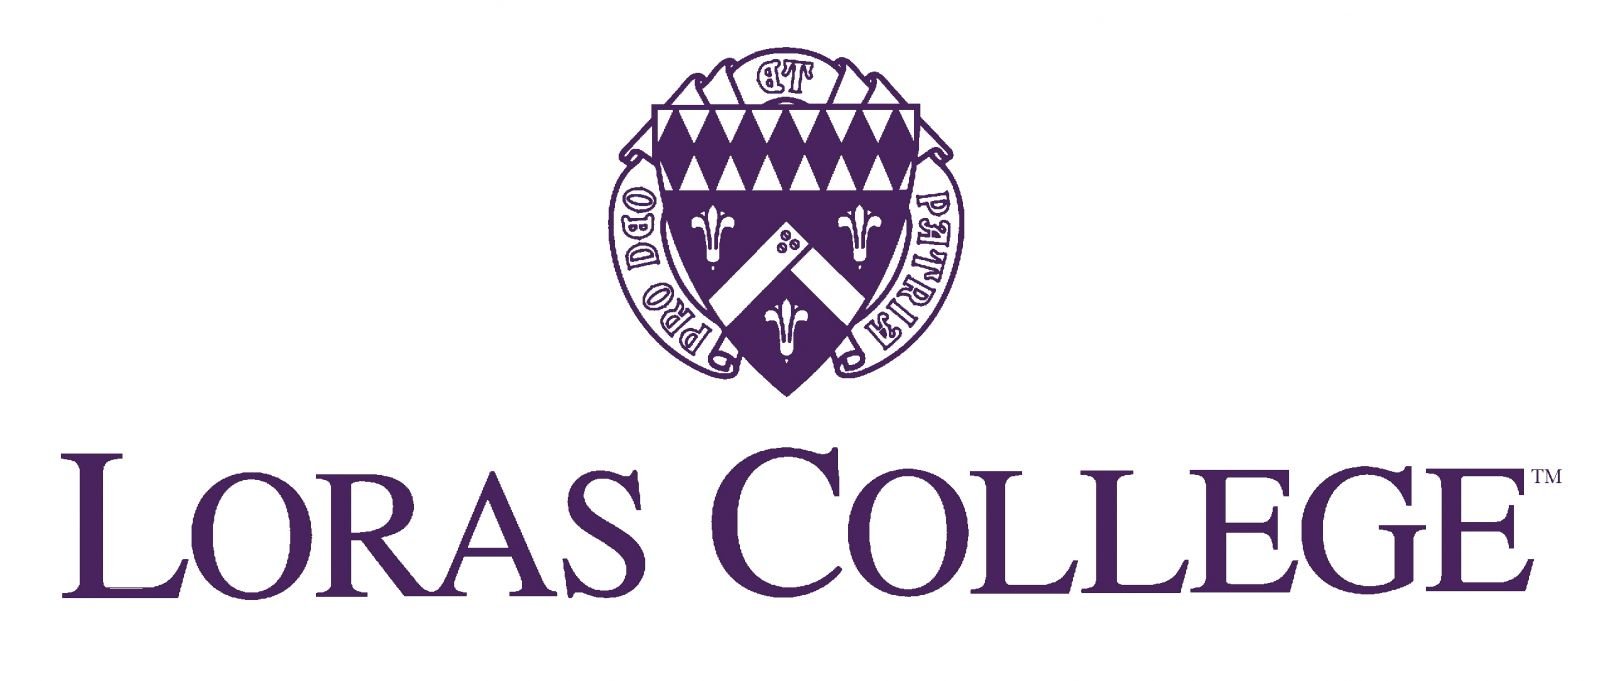 Loras_College_logo.jpg